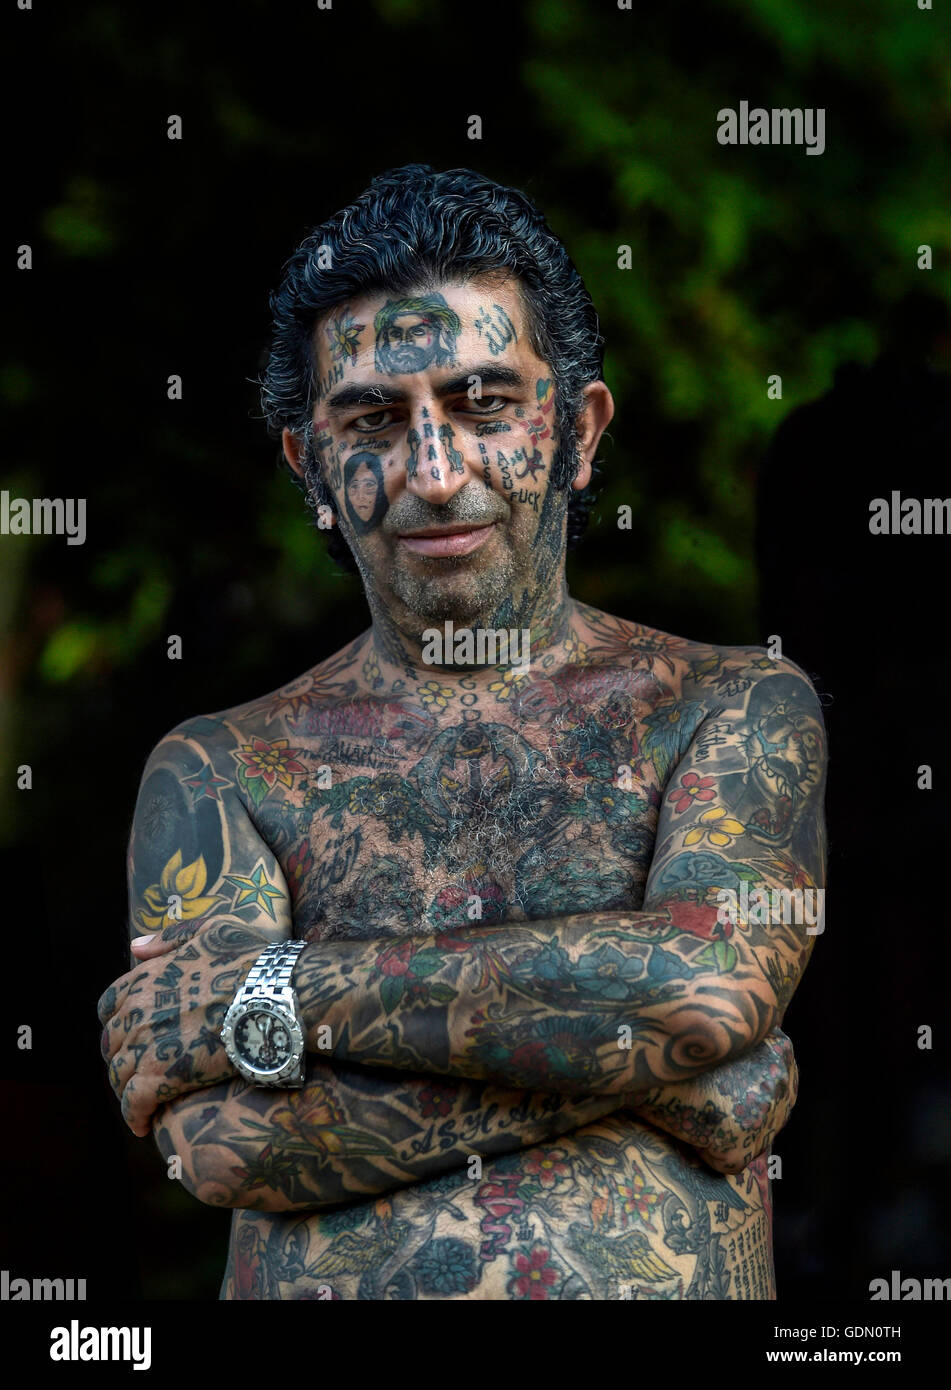 Man, Arab with tattoos all over his body, Ko Samui, Thailand Stock Photo